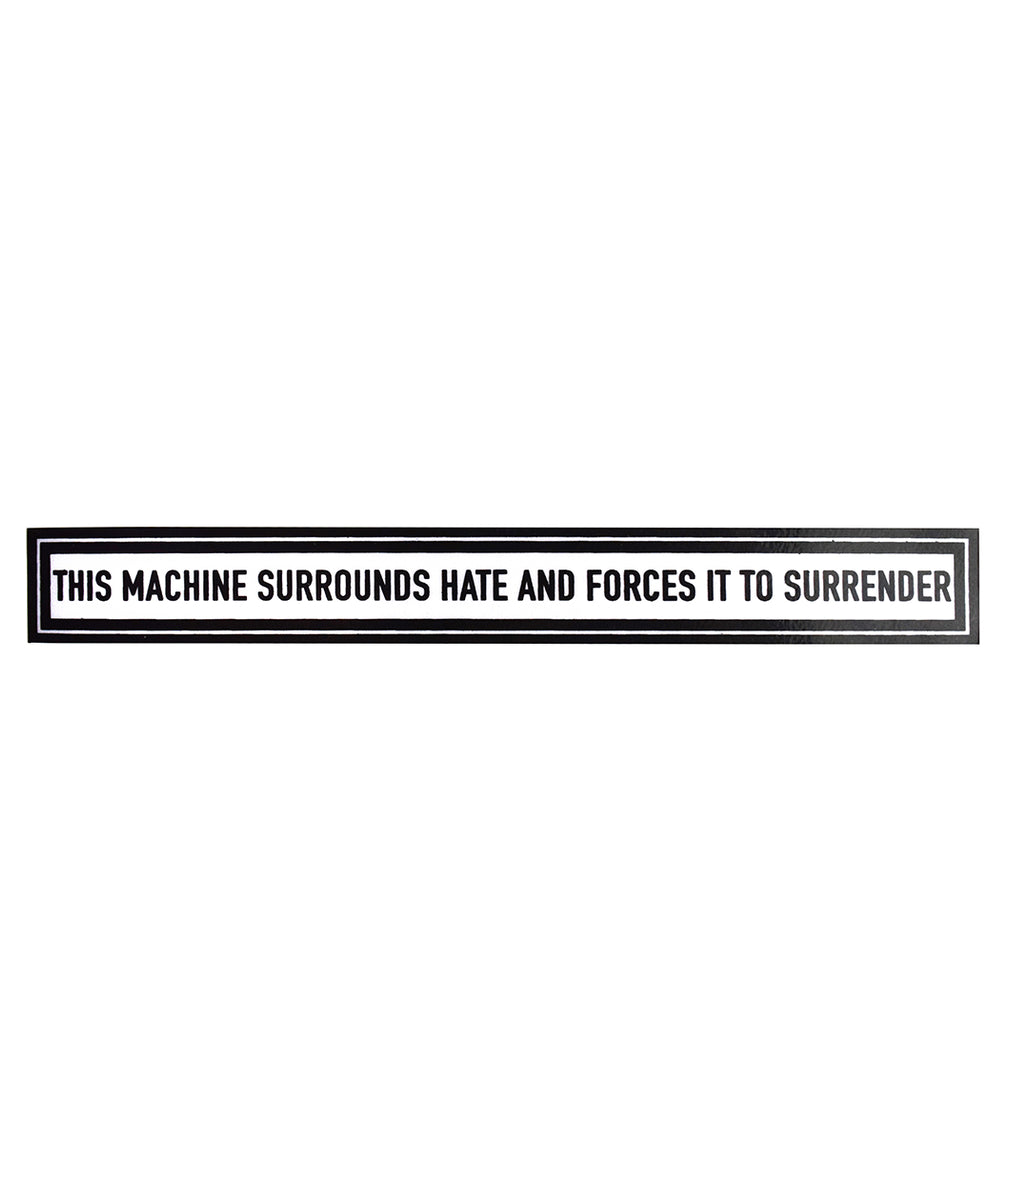 John Green  This Machine Kills Fascists Laptop Decal – DFTBA